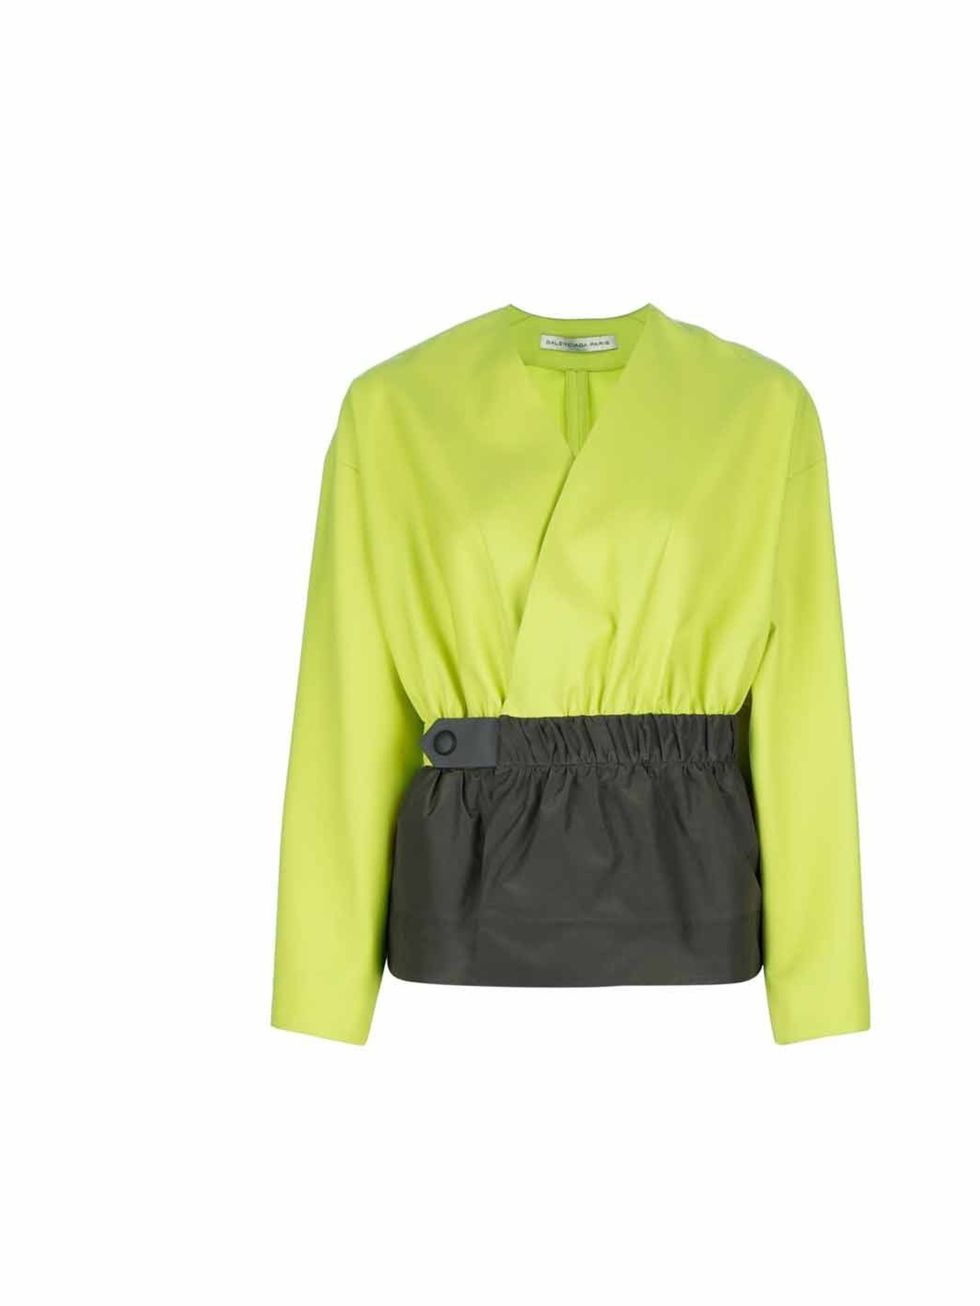 <p>Balenciaga Wrap Jacket at farfetch.com, £705.74</p><p><a href="http://www.farfetch.com/shopping/women/balenciaga-wrap-jacket-item-10281122.aspx">BUY NOW</a></p>